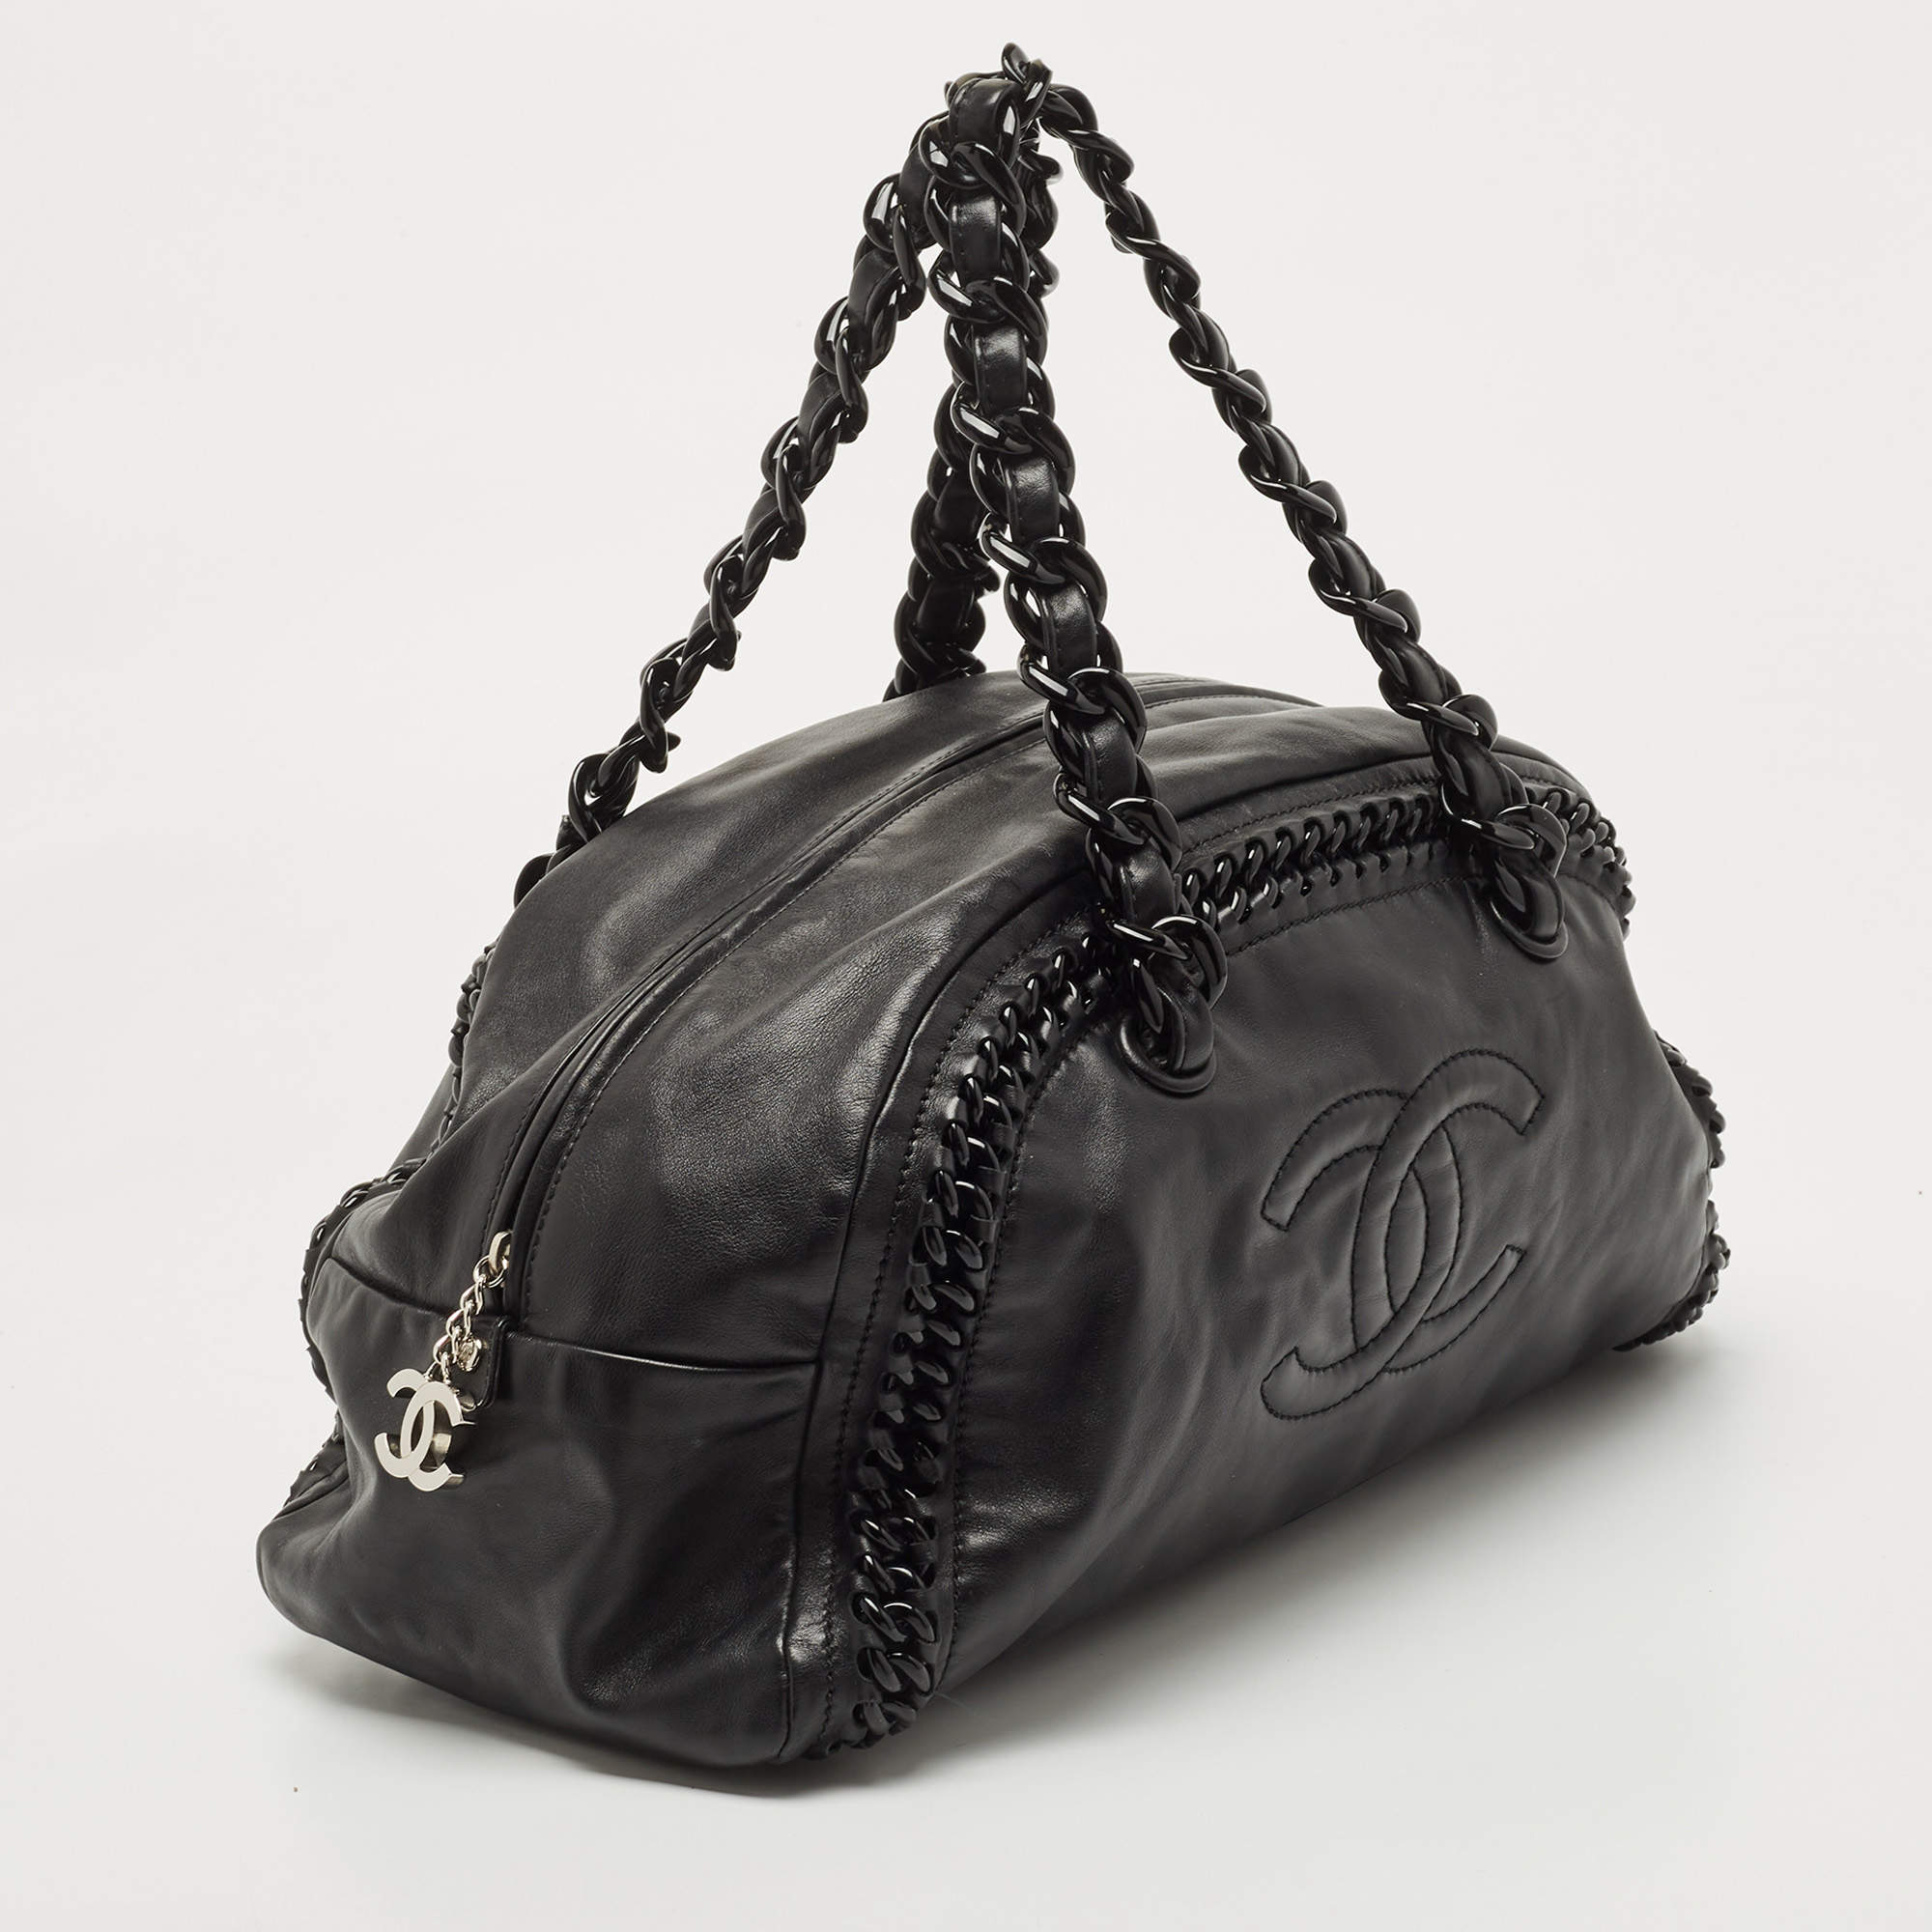 Chanel Black Matte Leather Large Luxe Ligne Bowler Bag